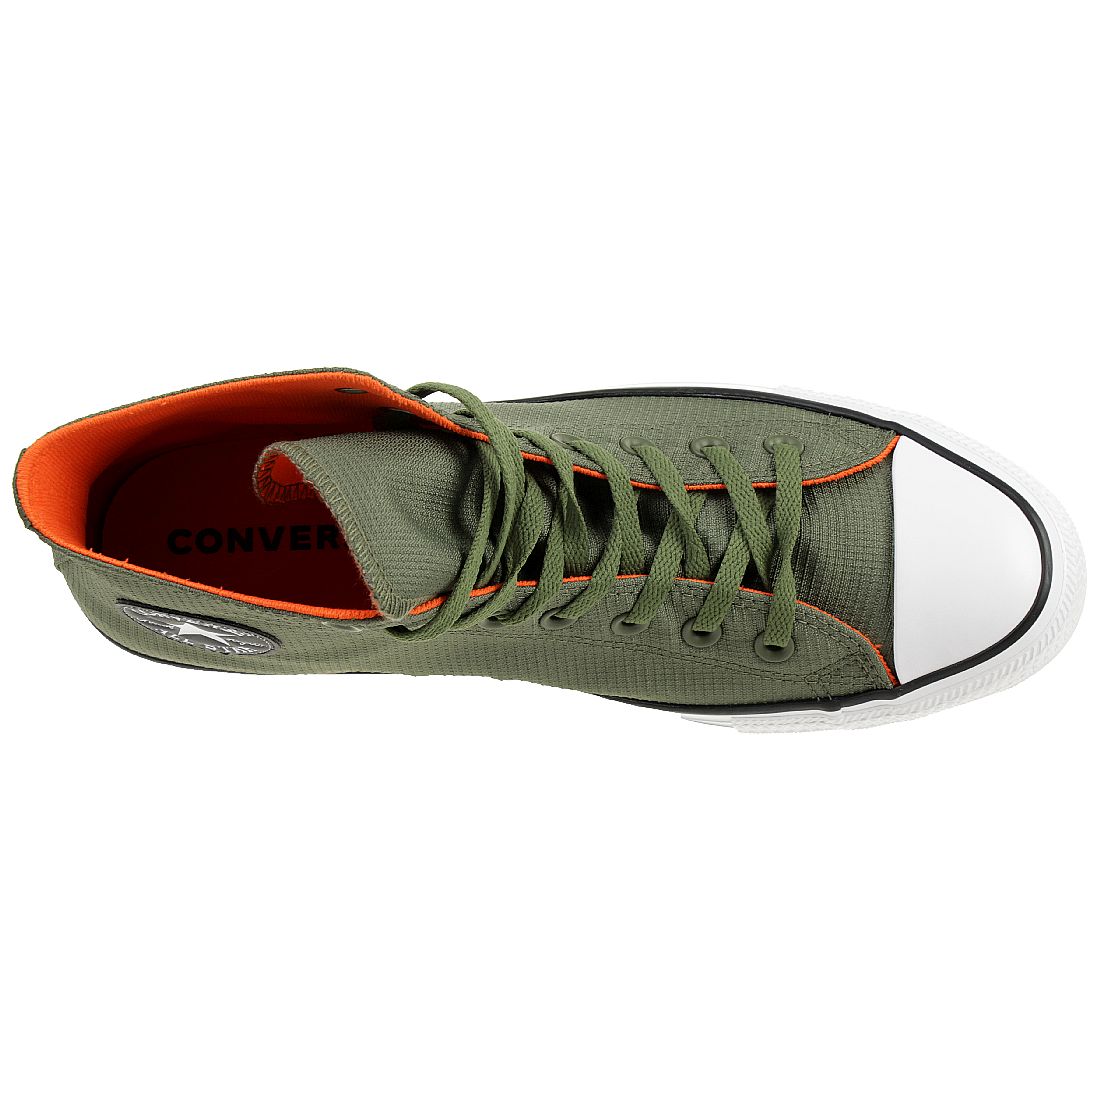 Converse C Taylor All Star HI Chuck Schuhe Sneaker Lightweight Nylon grün 162391C